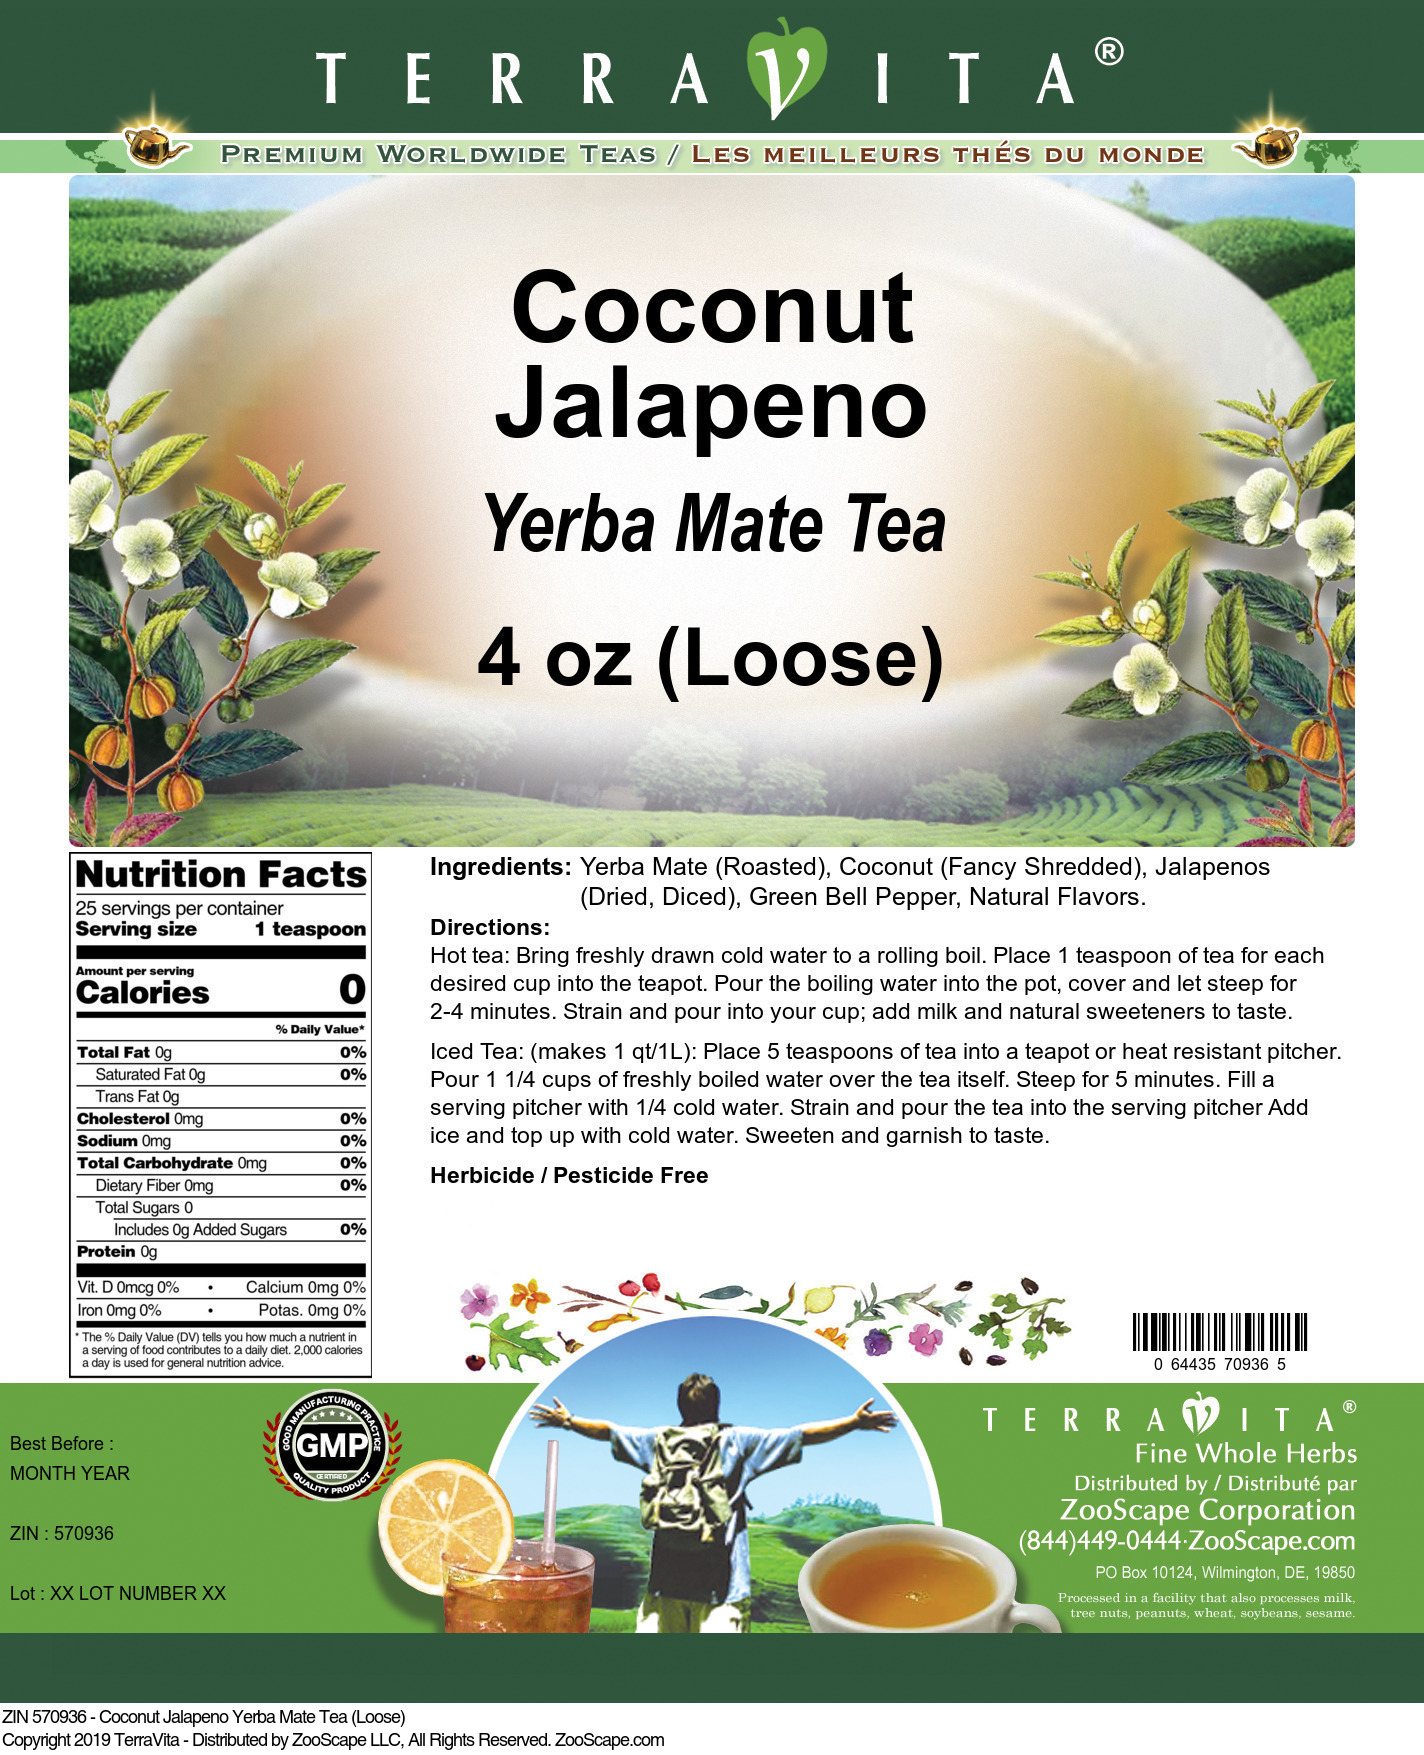 Coconut Jalapeno Yerba Mate Tea (Loose) - Label